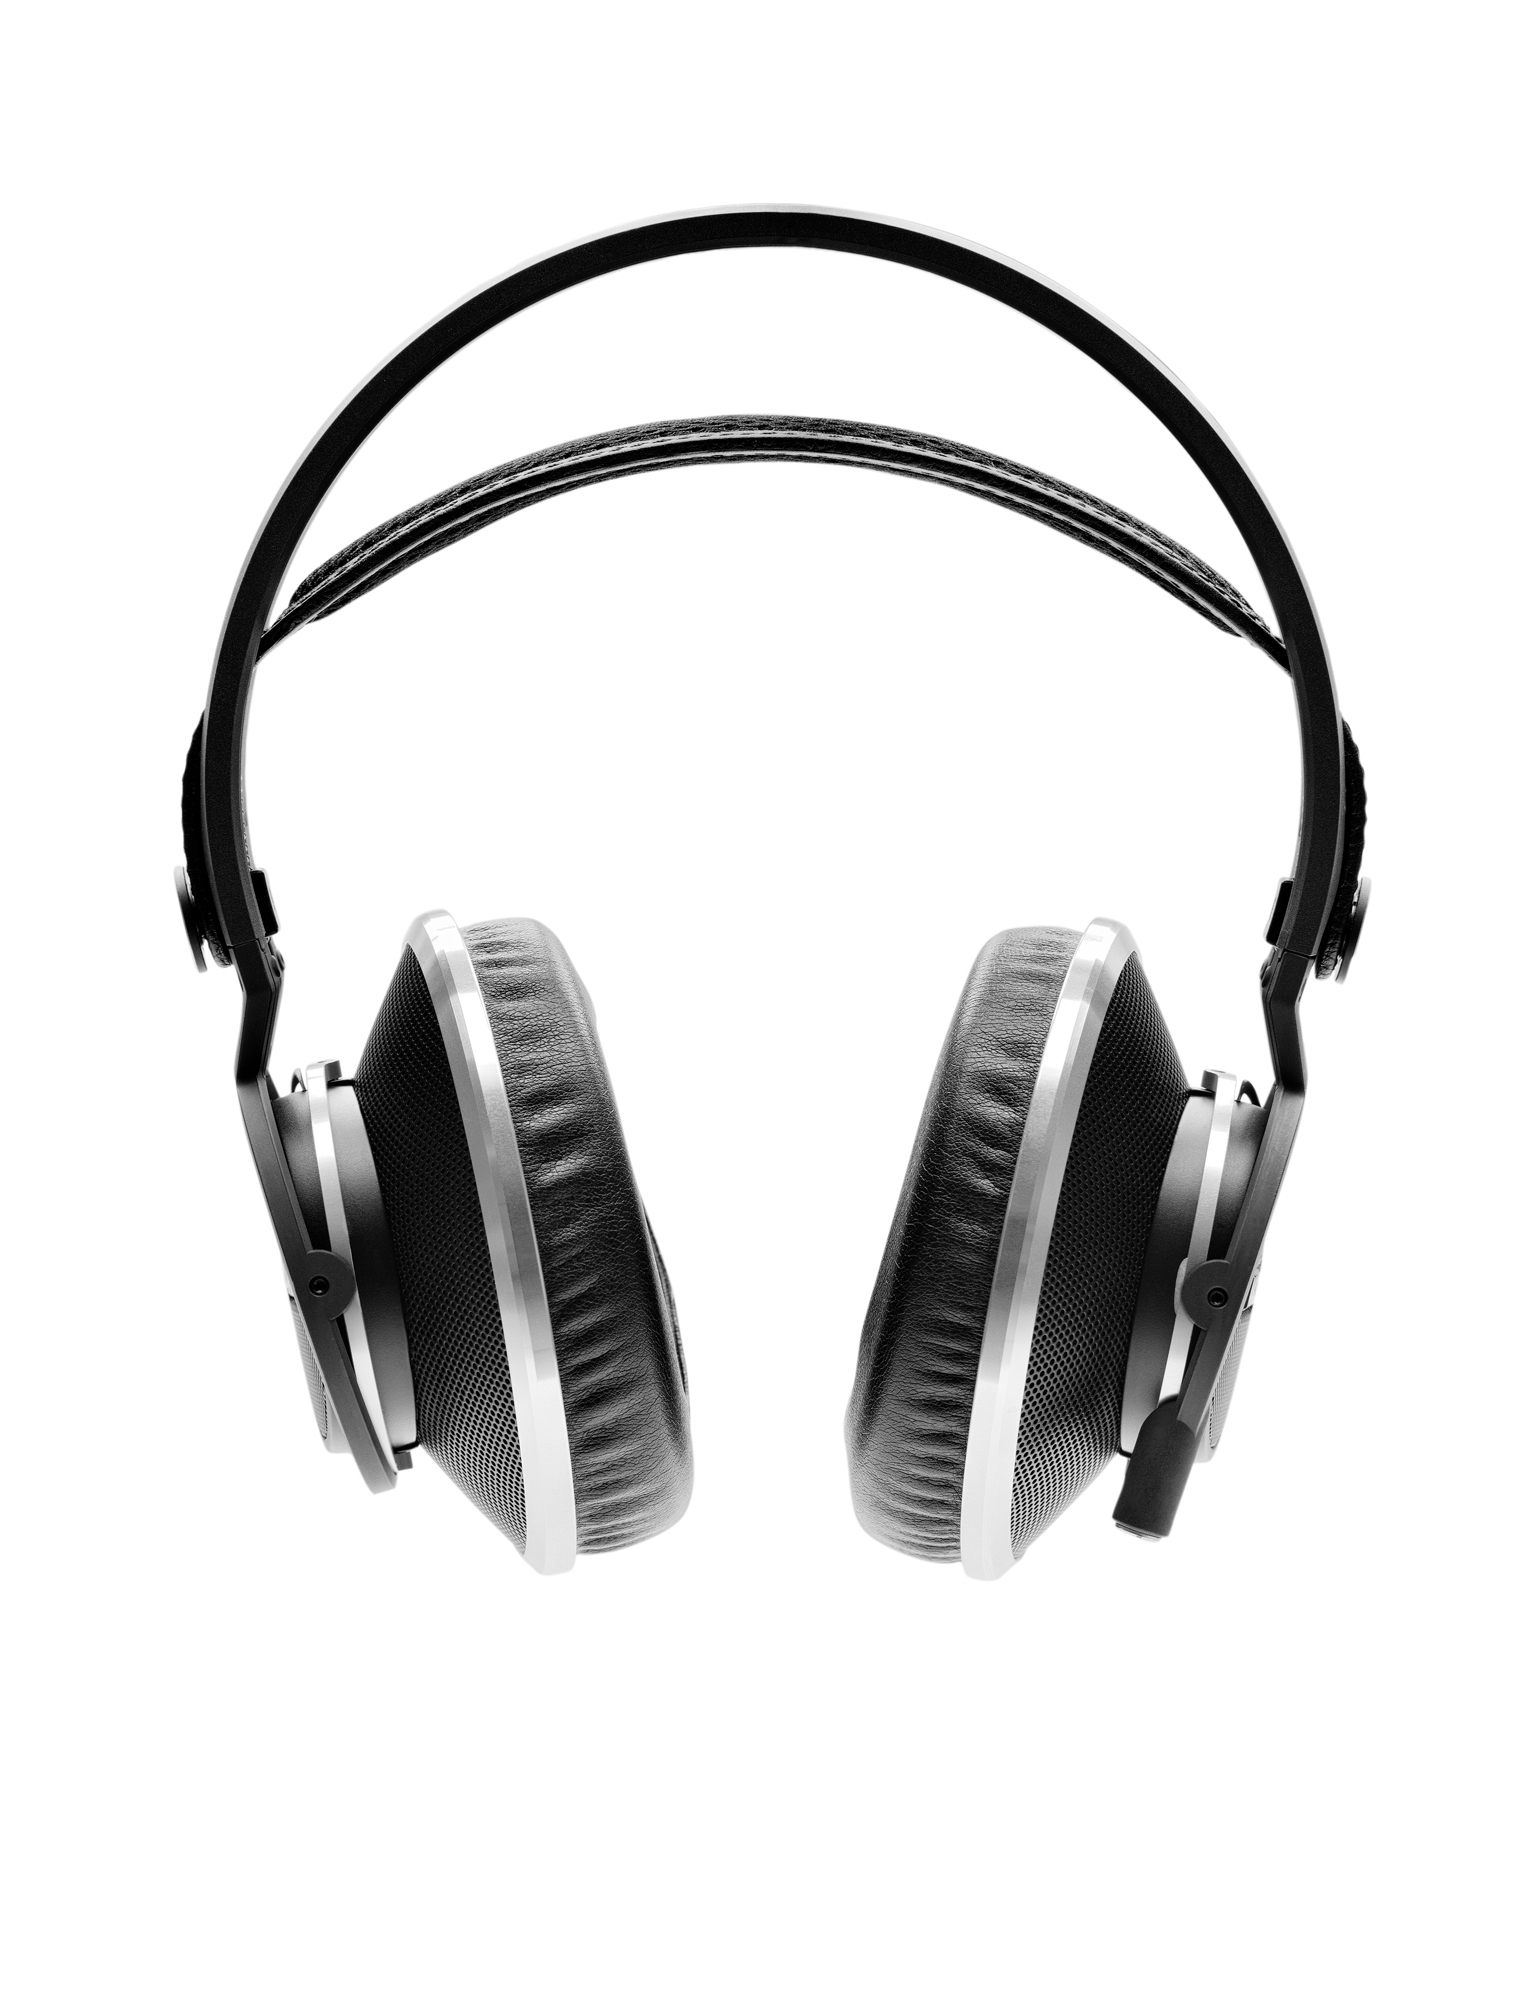 HARMAN’s AKG Earns TEC Award for K812 Reference Headphones